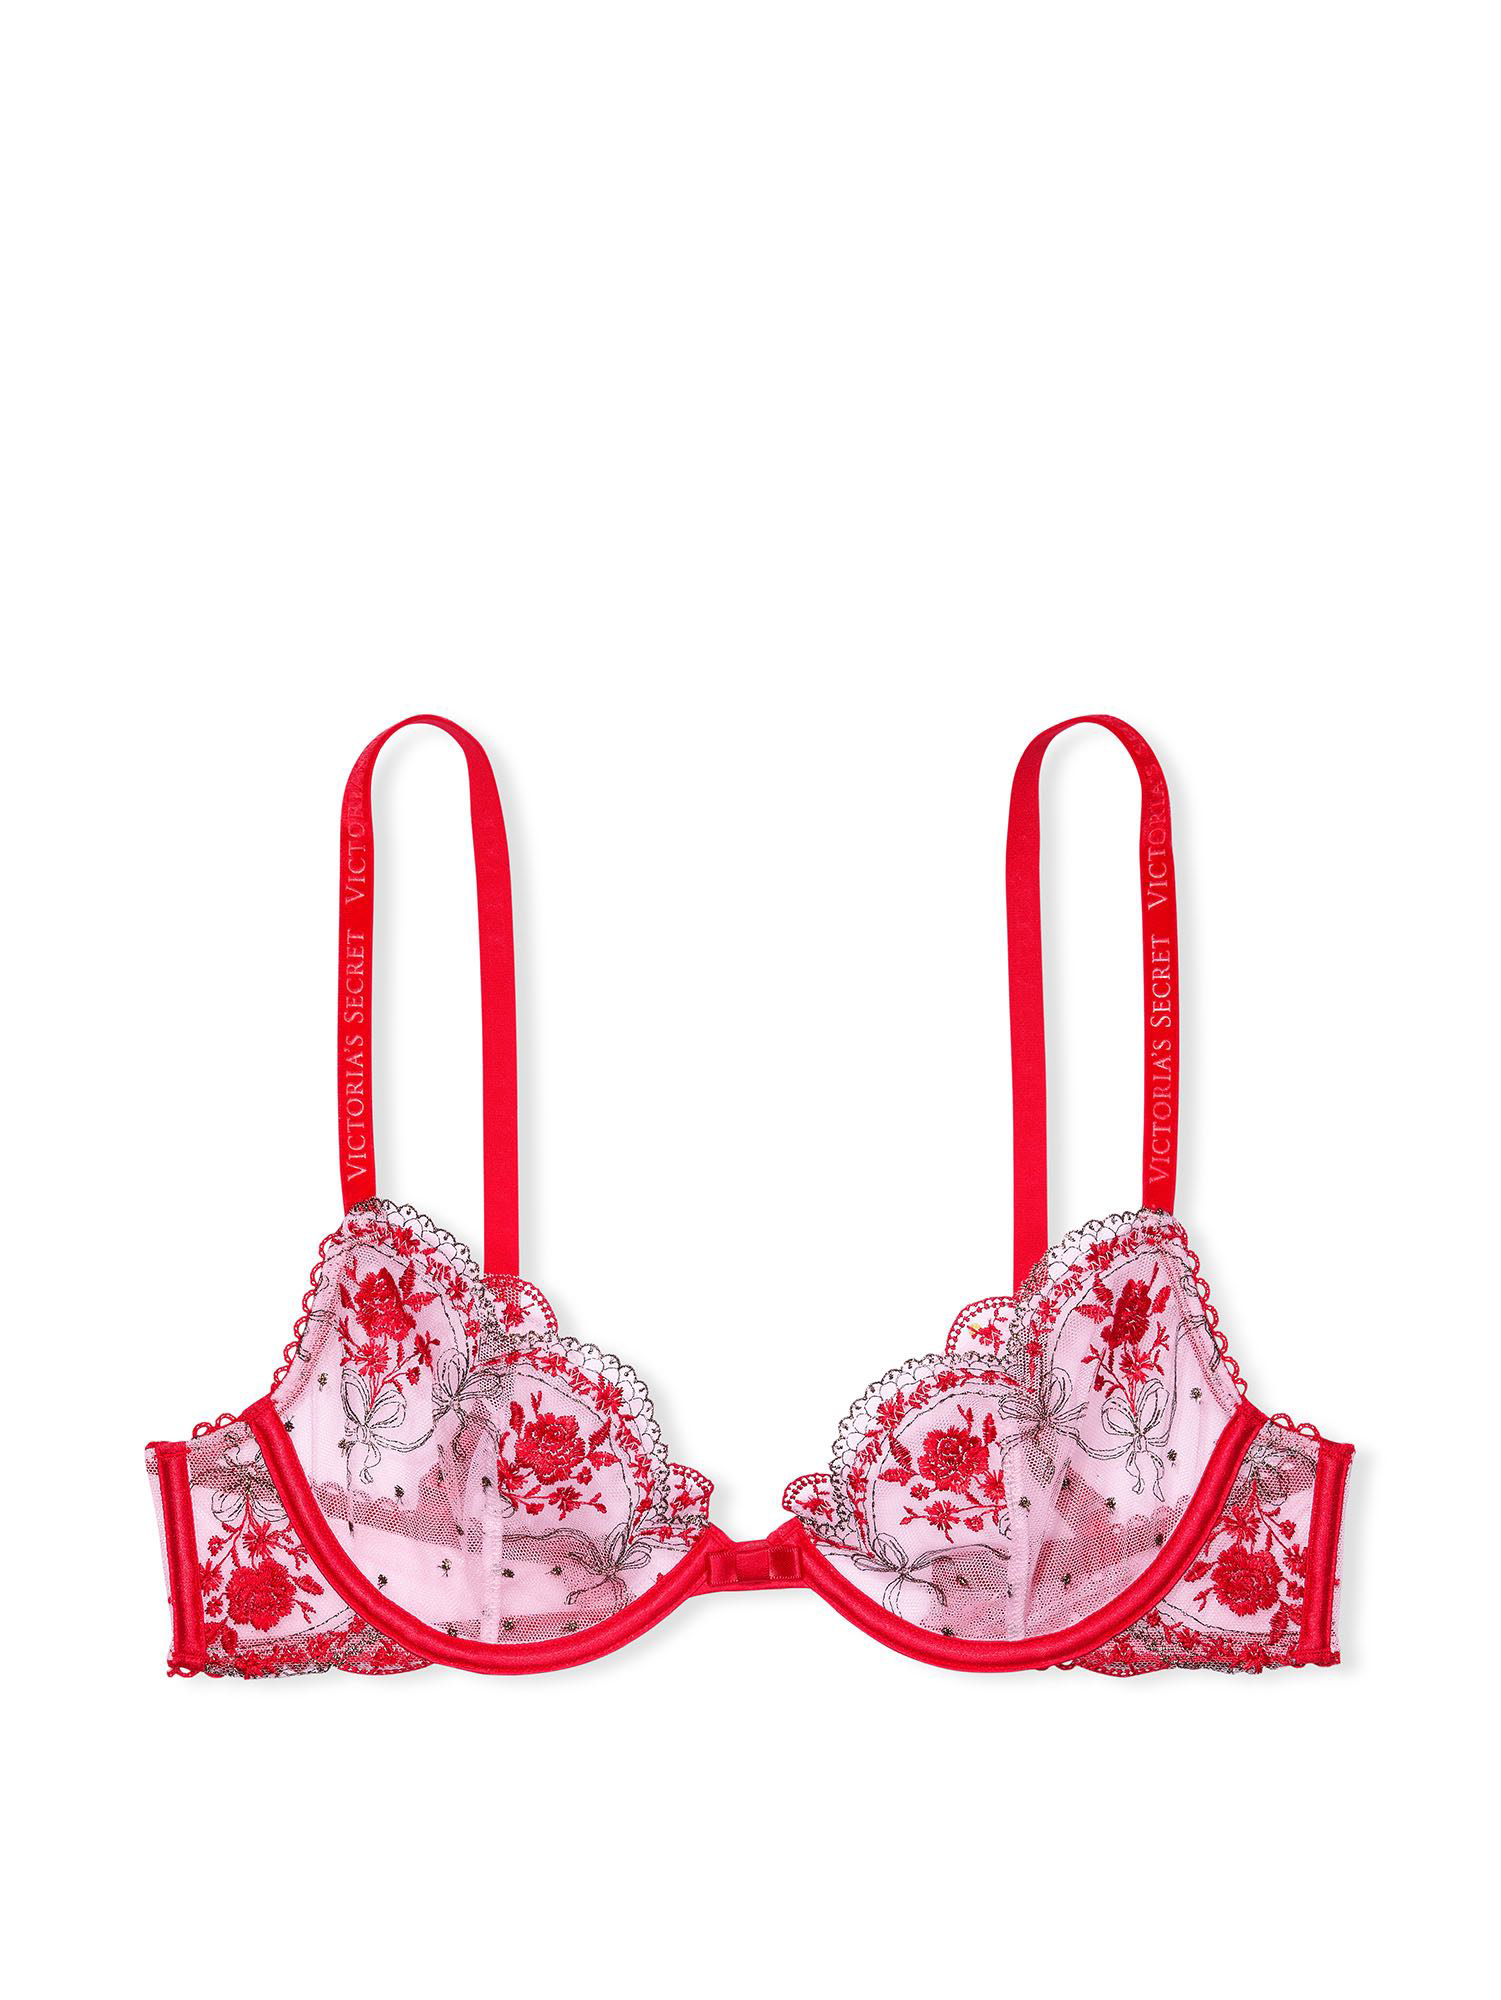 Victoria's Secret DREAM ANGELS Unlined Heart Embroidery Demi Bra Thong Set  